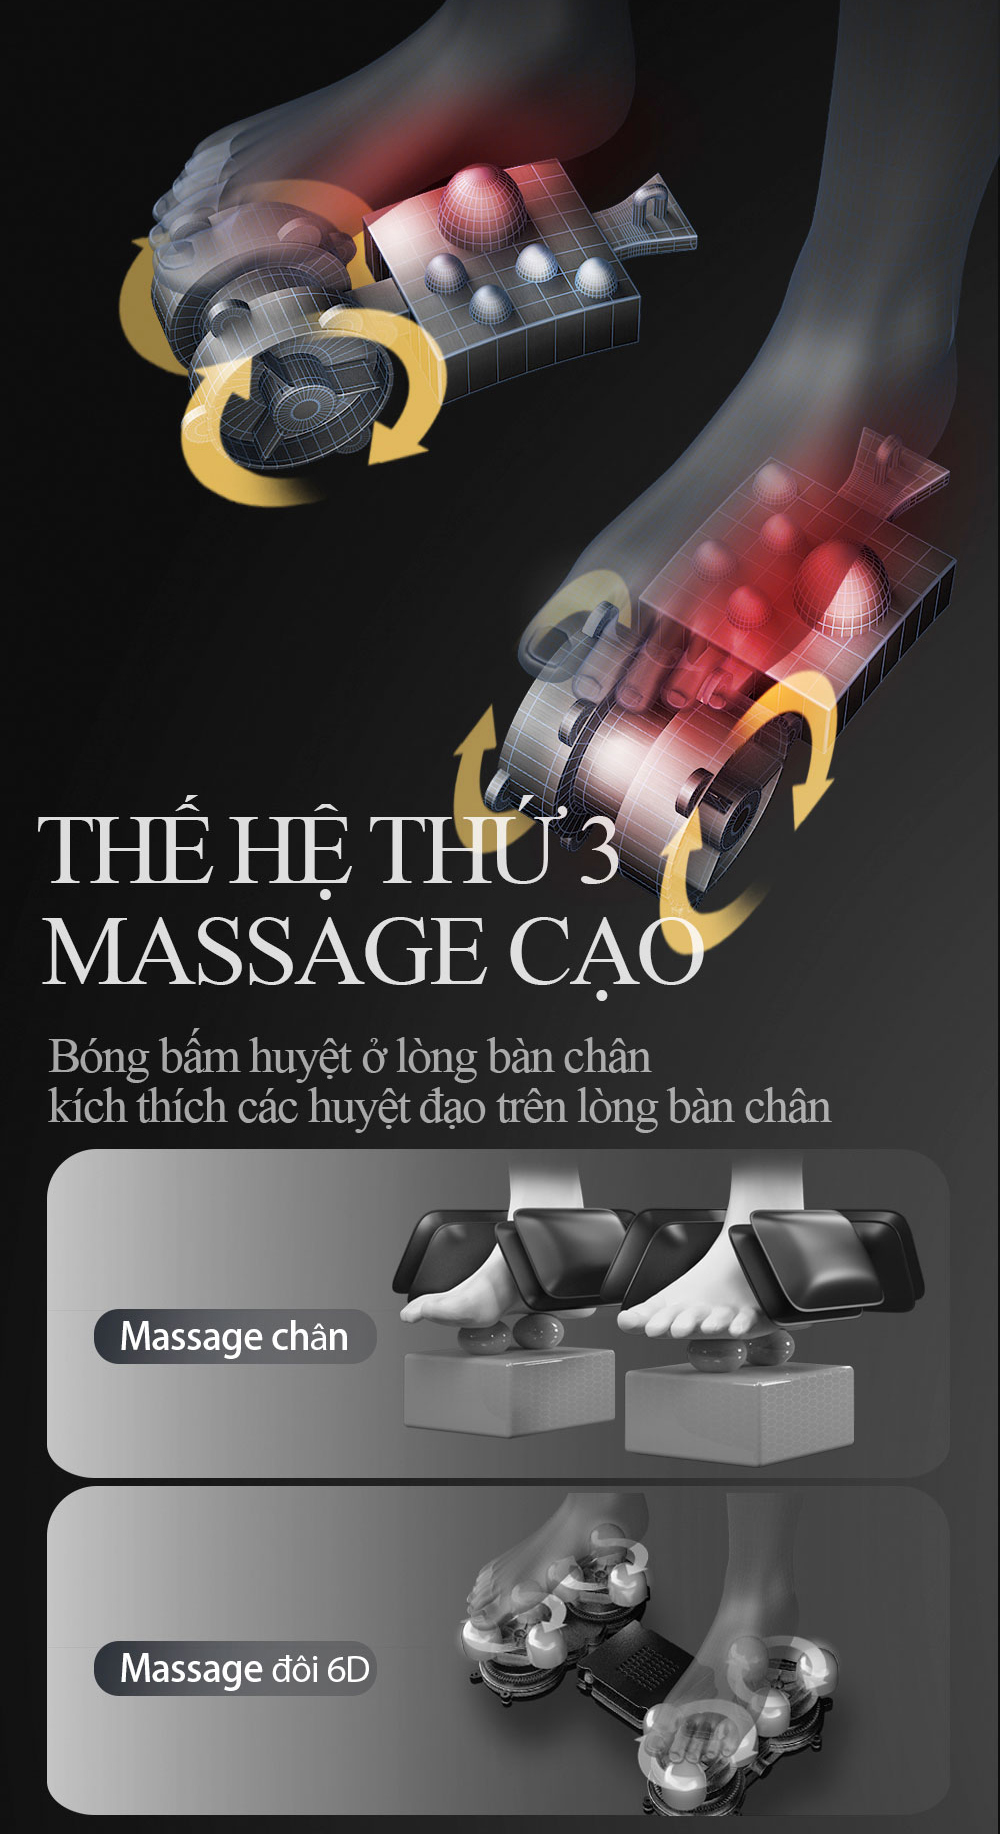 Ghế massage Queen Crown cải tiến cụm massage chân hiện đại